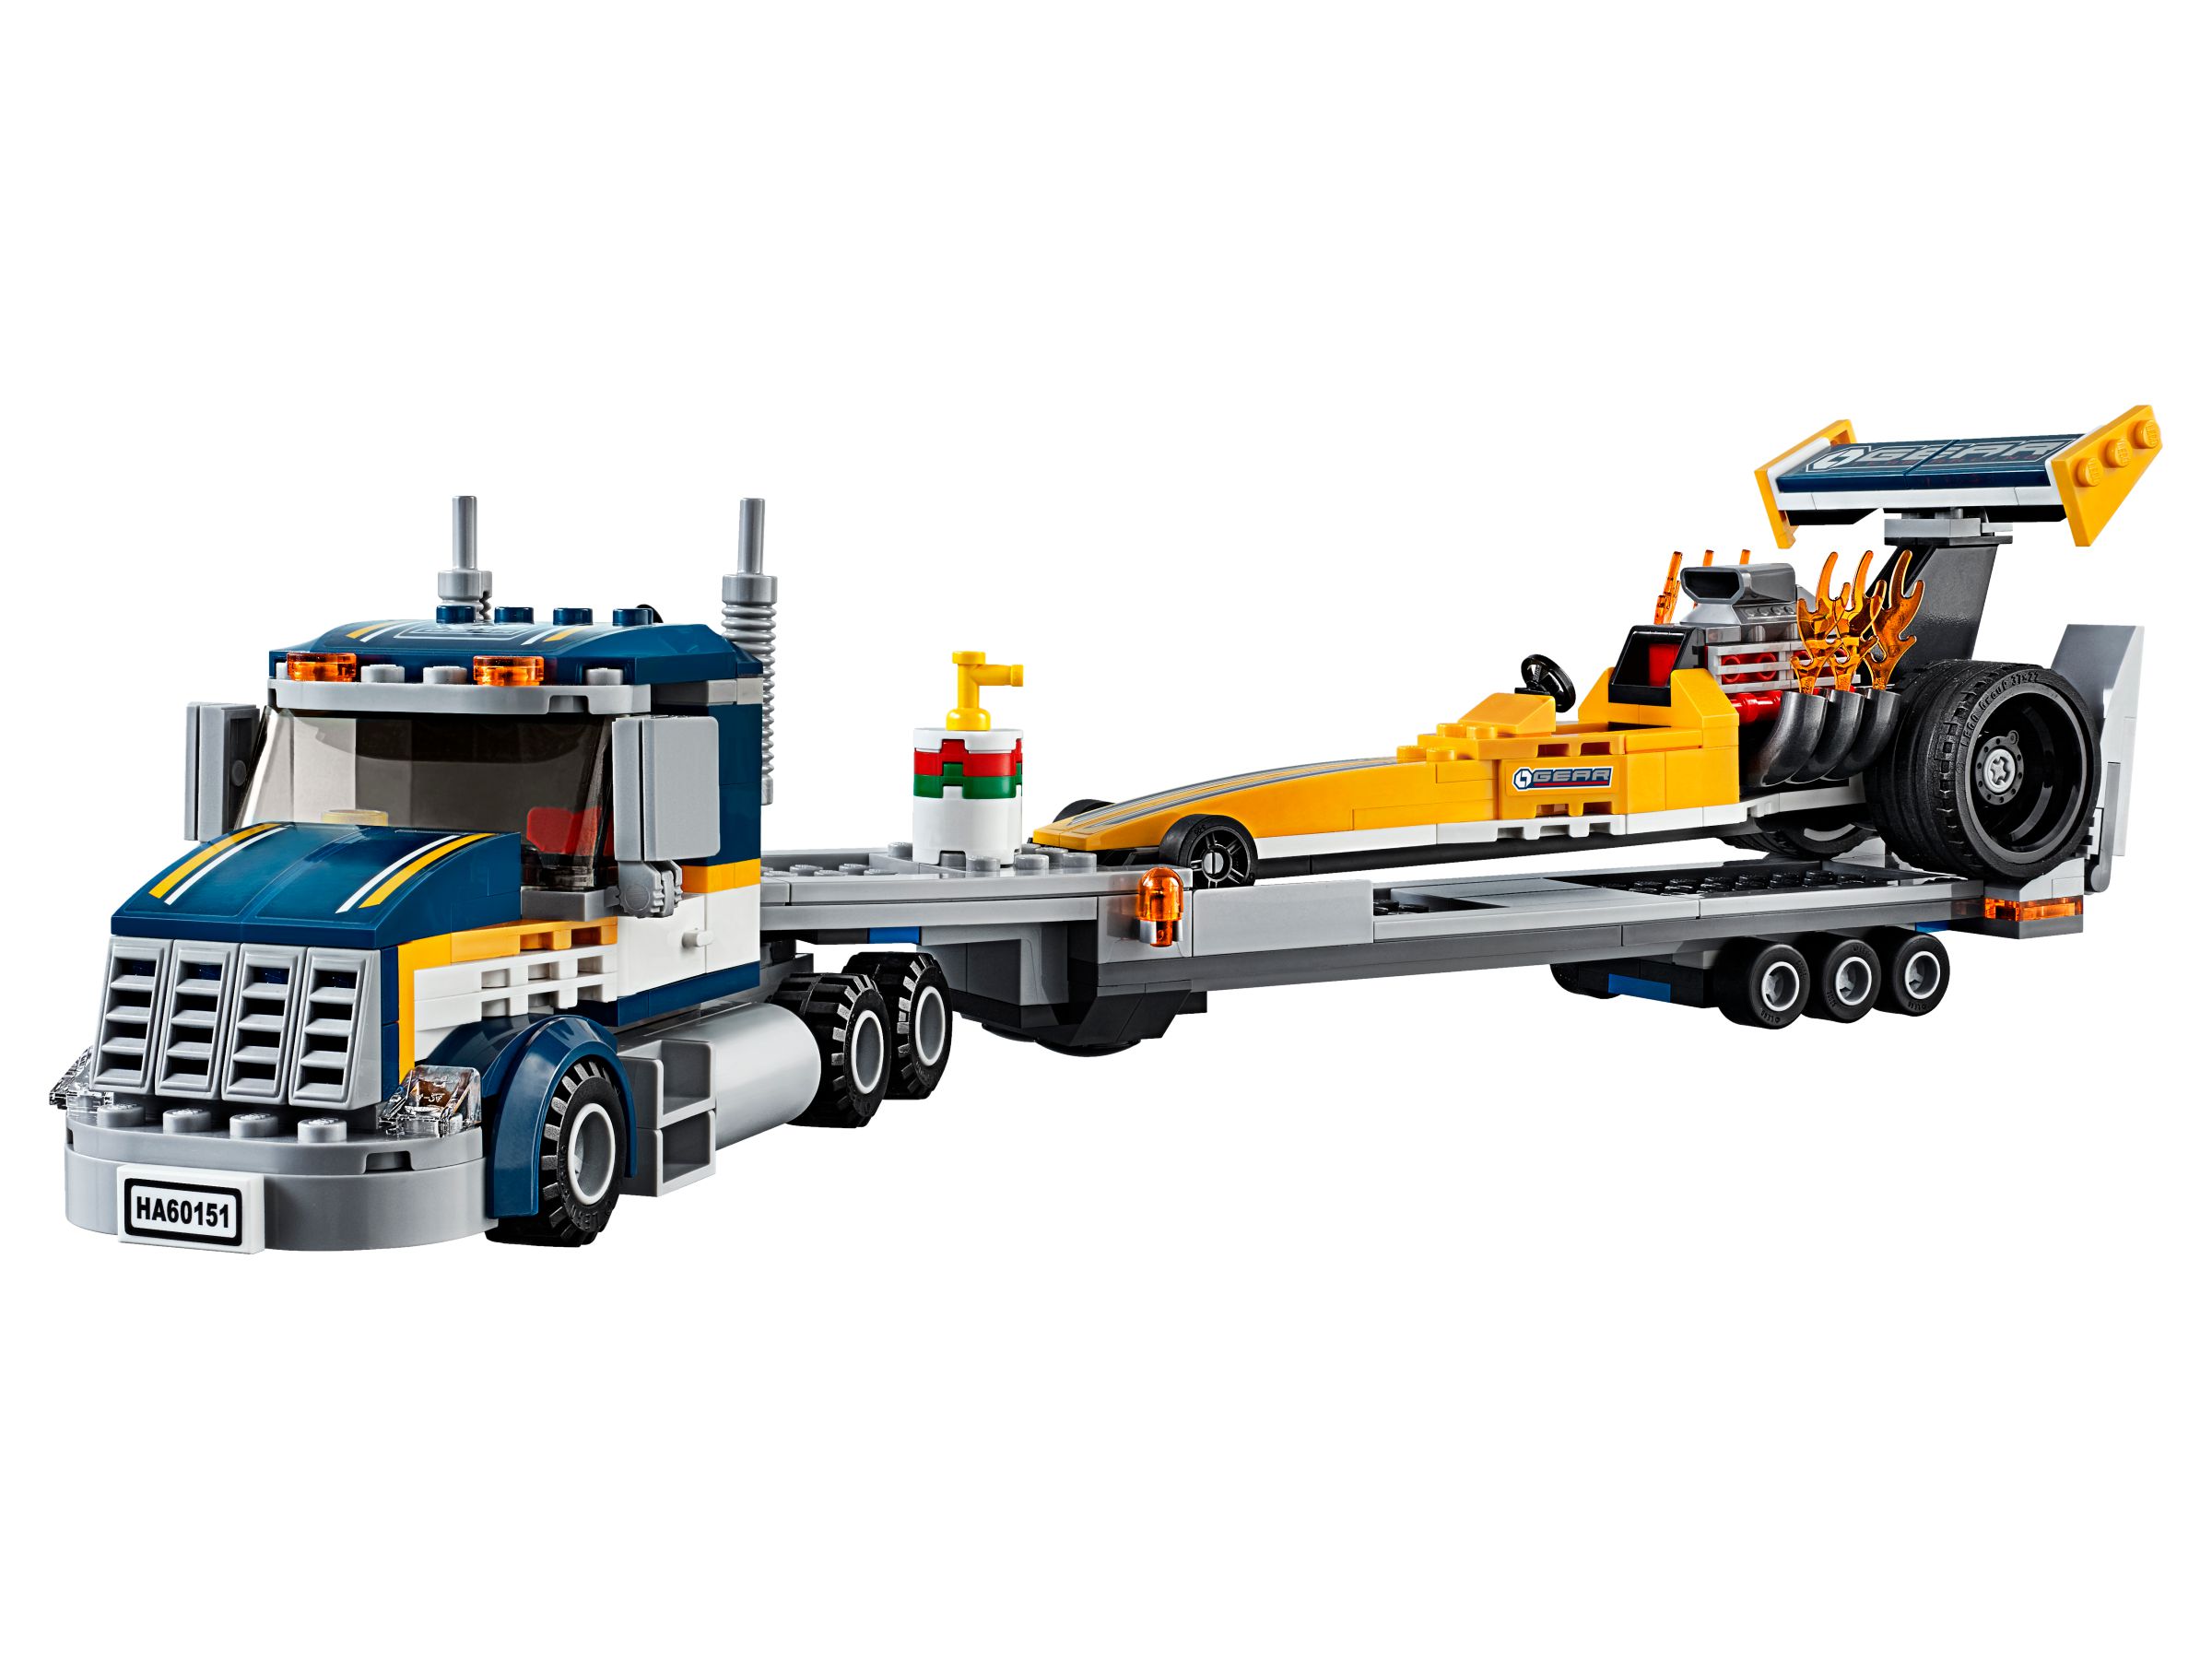 LEGO City 60151 Dragster-Transporter LEGO_60151_alt2.jpg